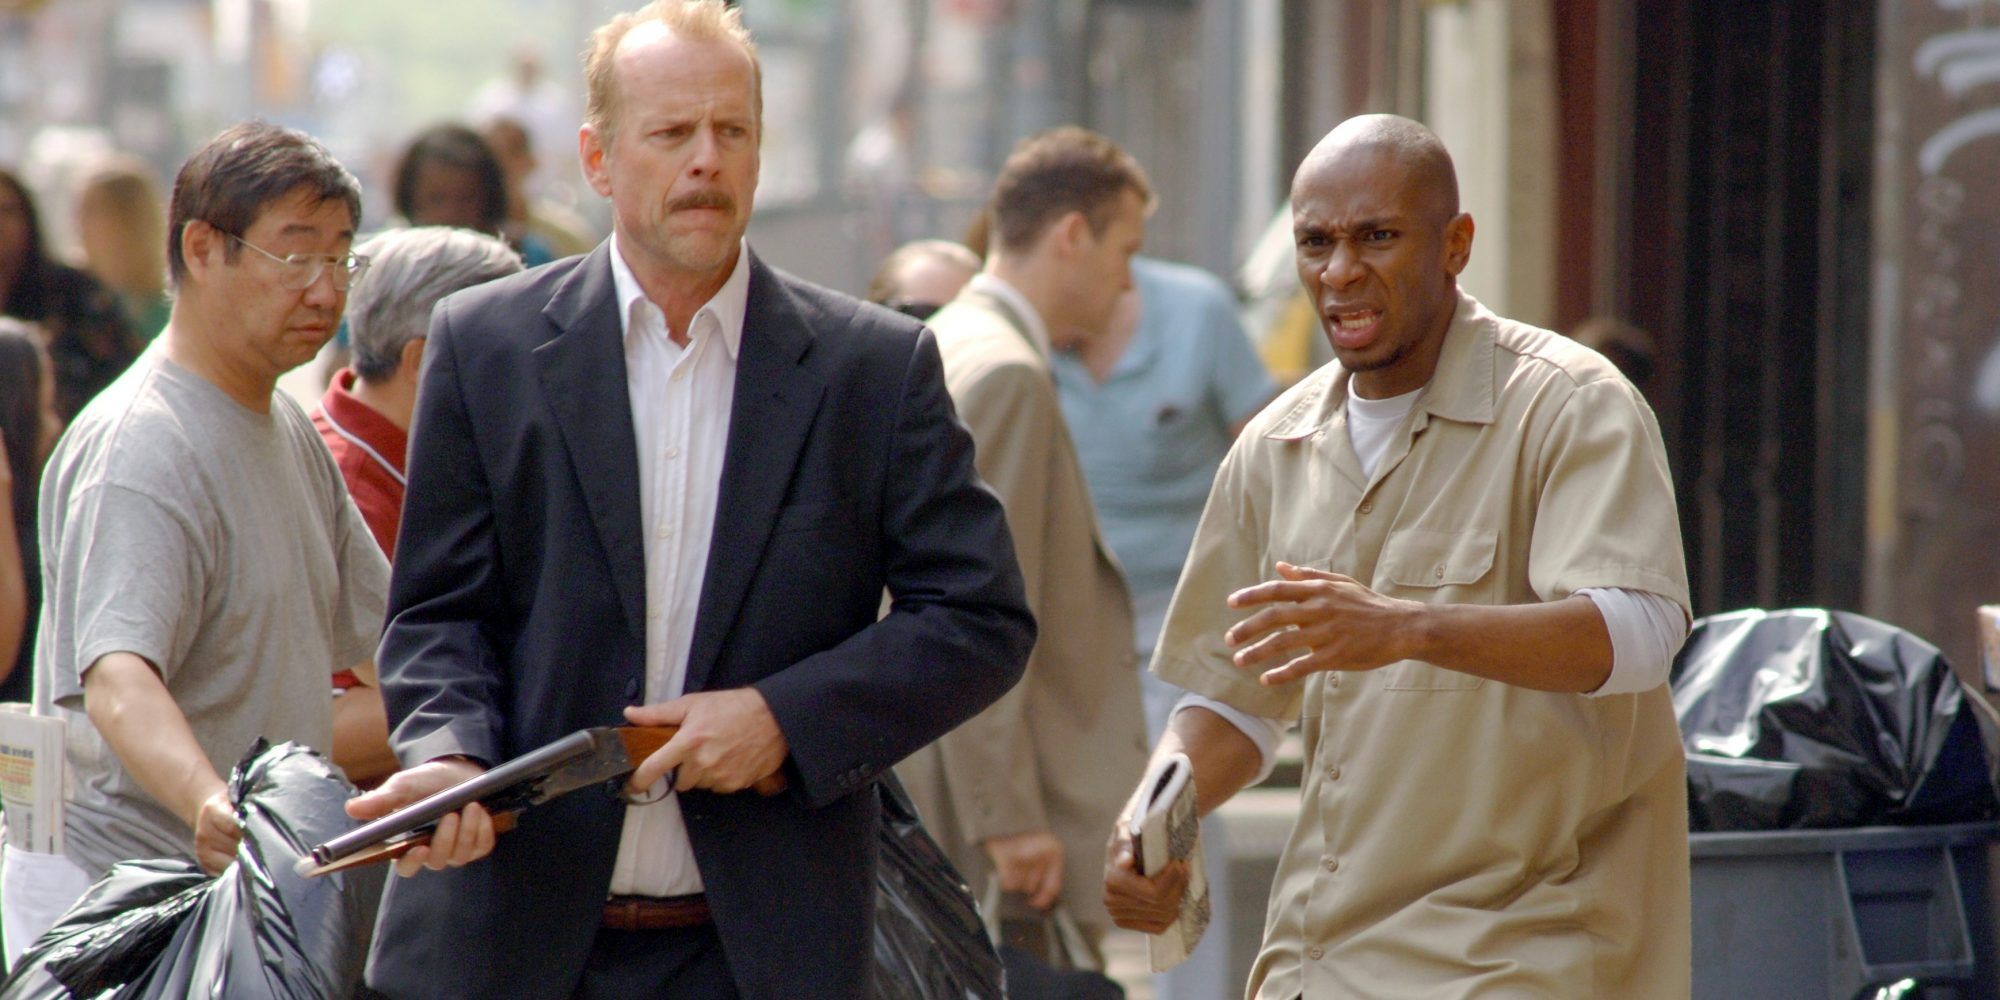 Bruce Willis with gun walking with Mos Def in 16 Blocks